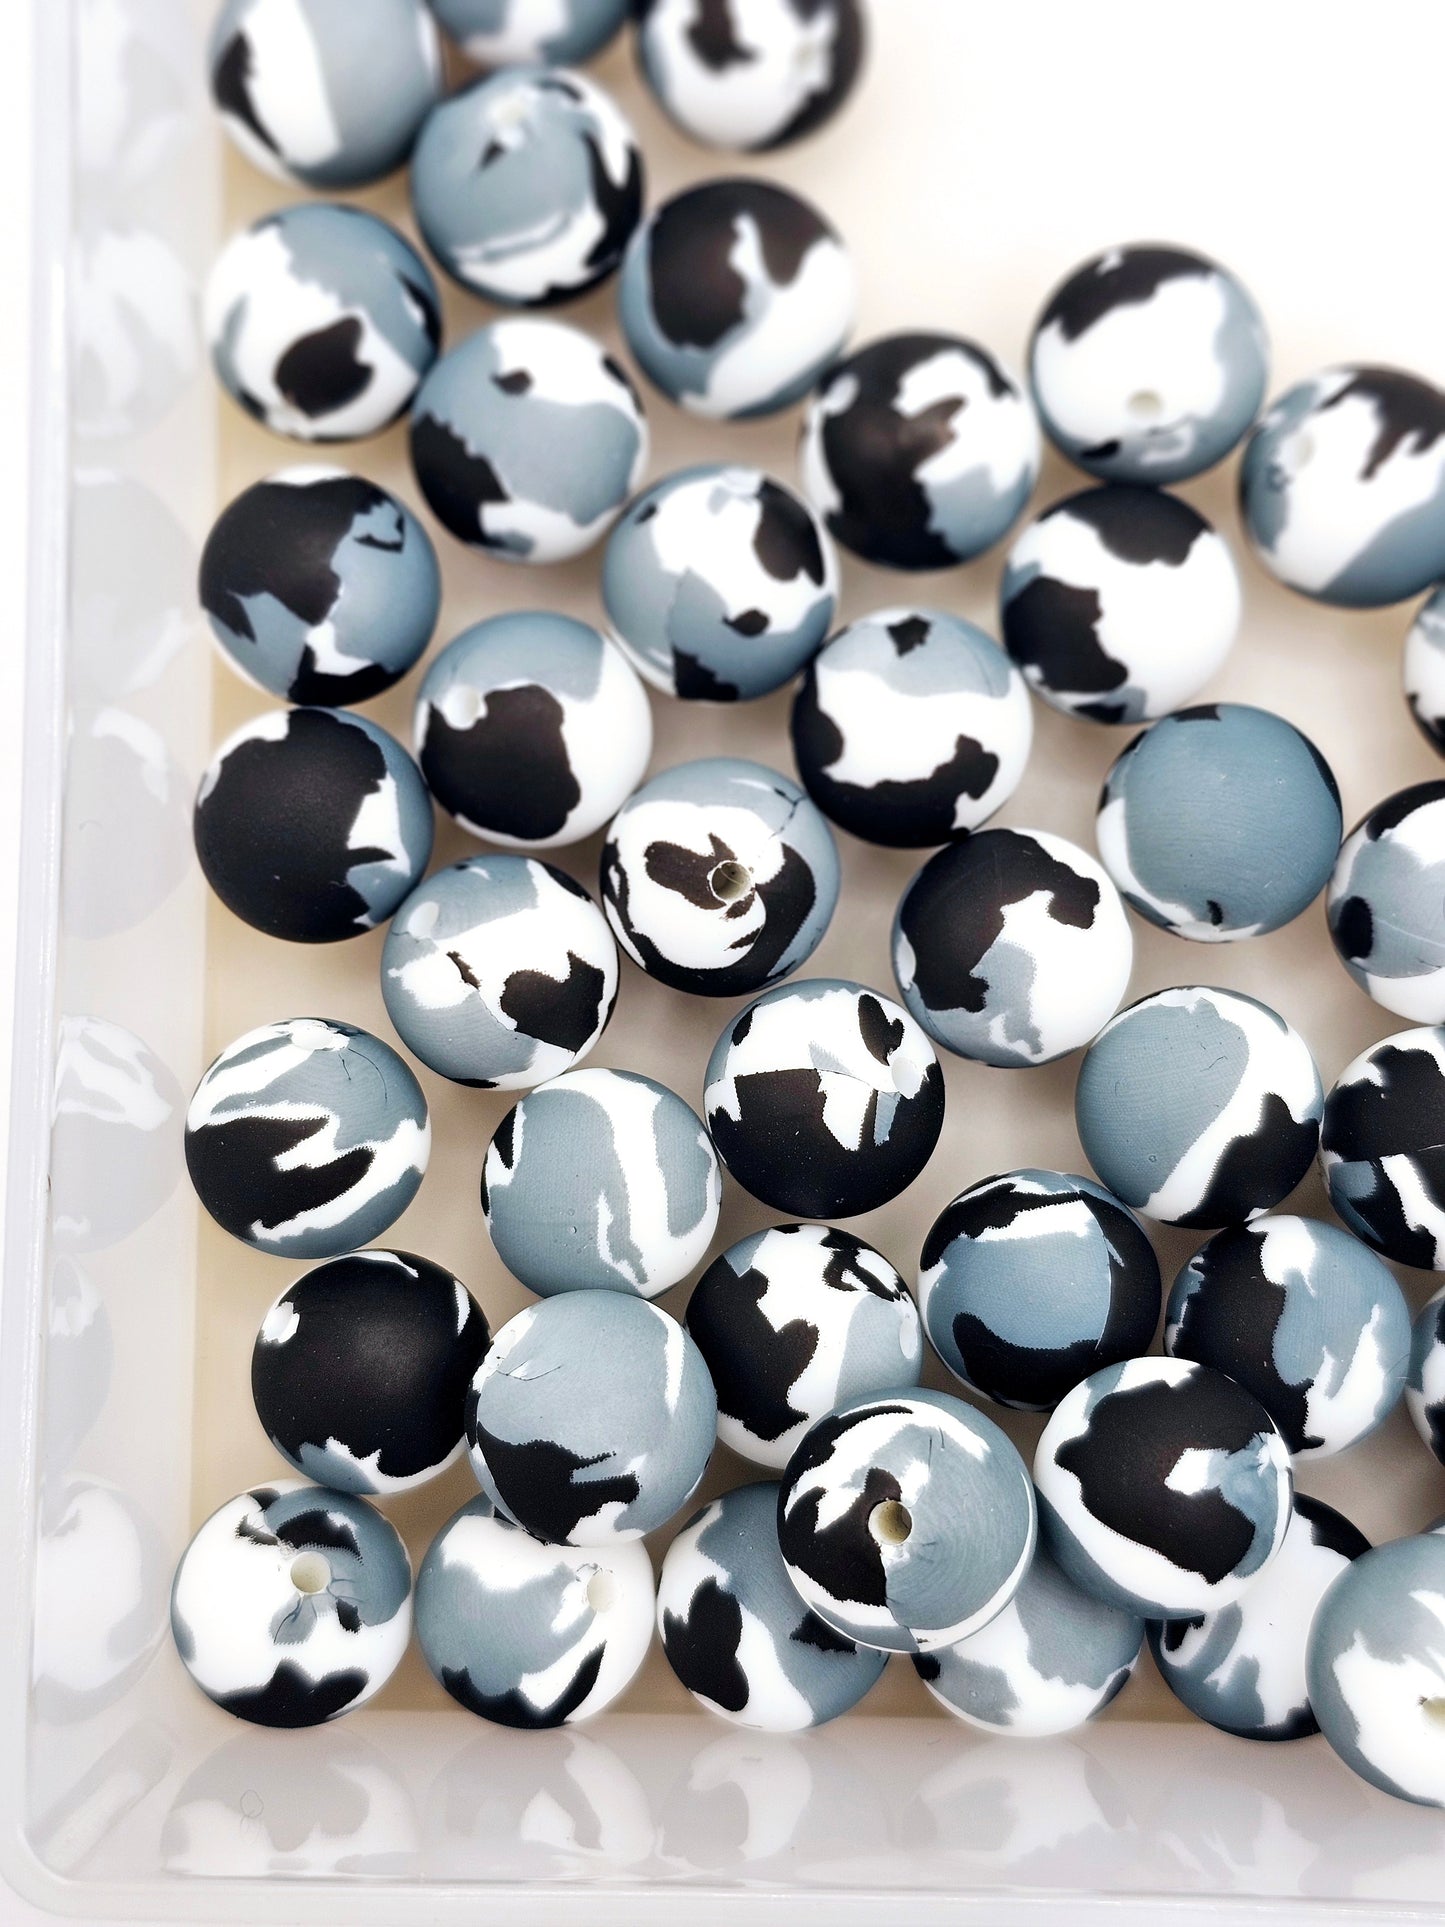 Black and gray camo 15mm silicone round bead